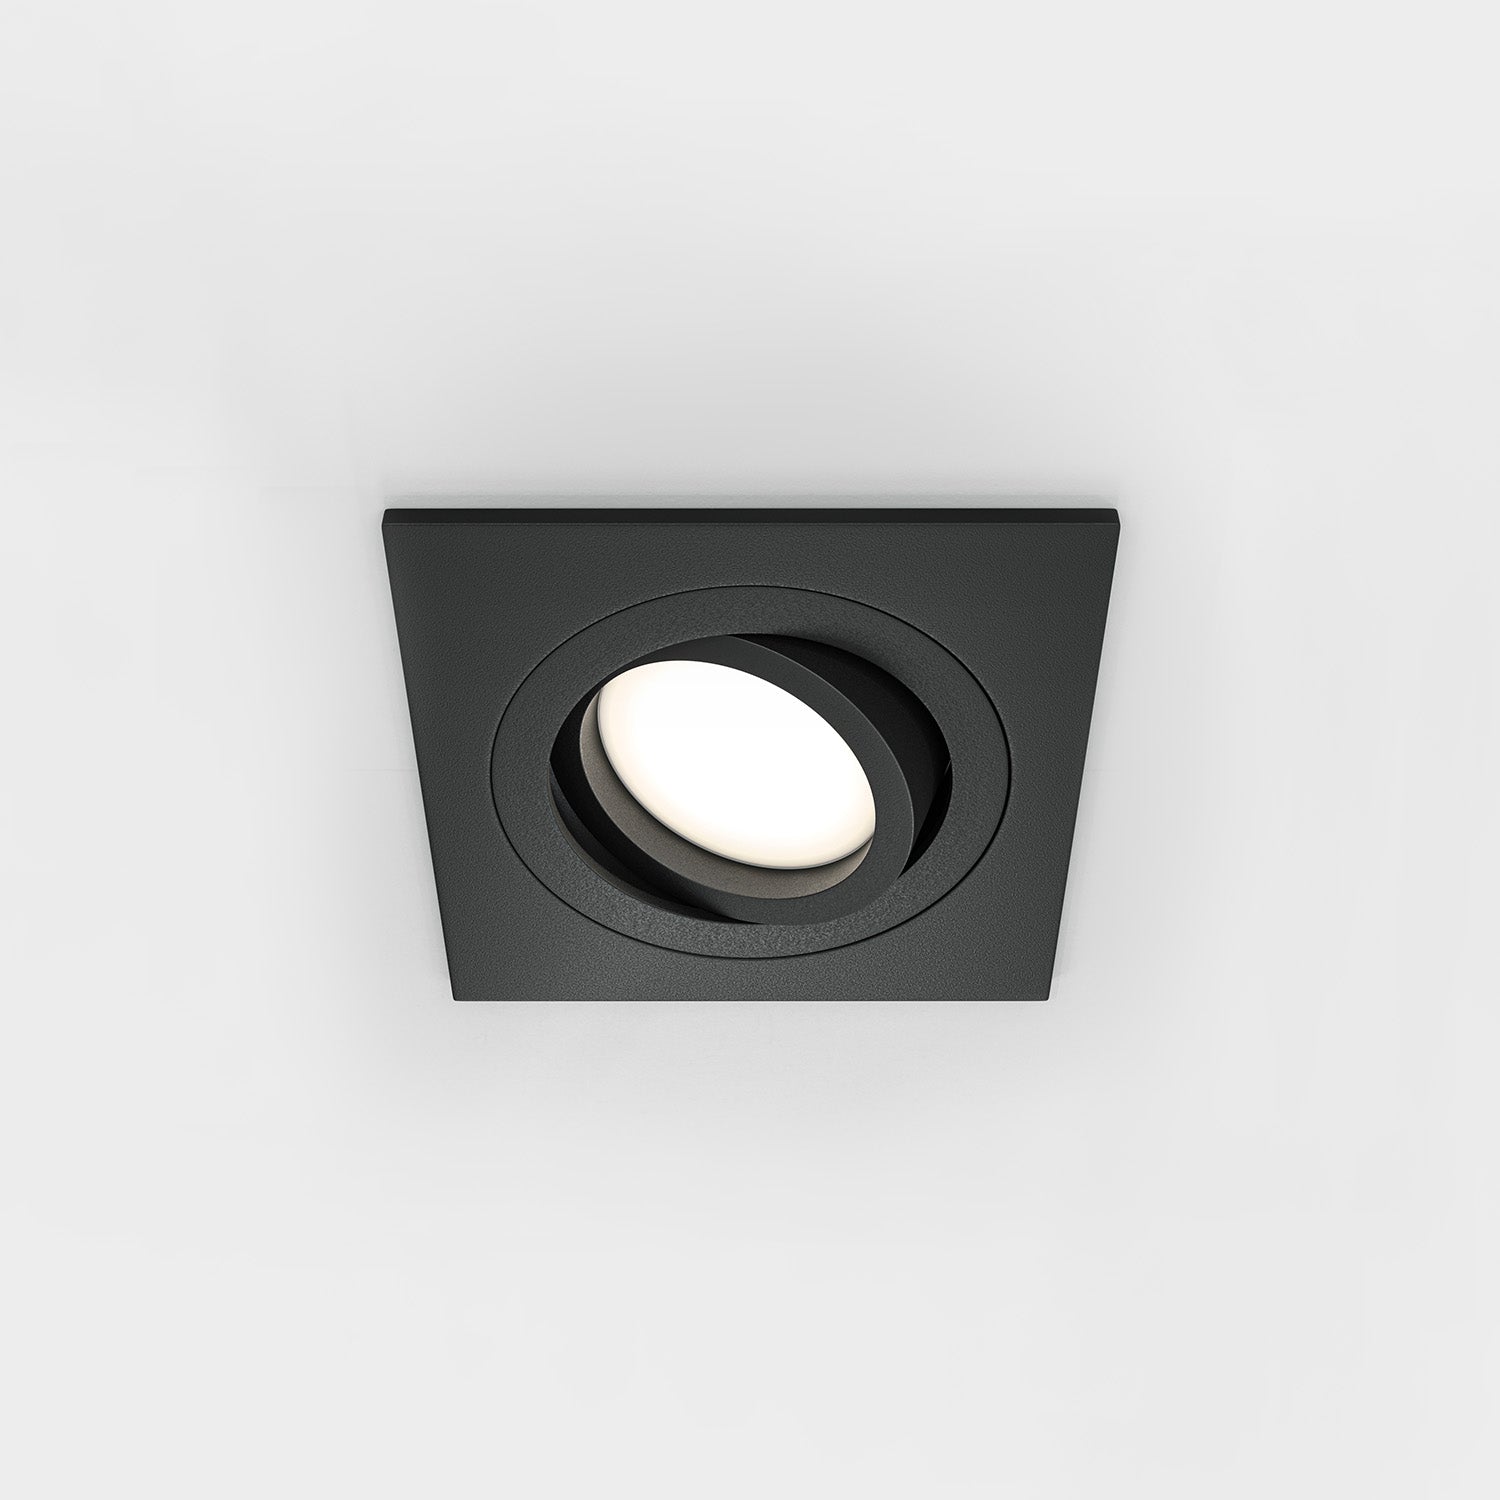 ATOM B - Square recessed spotlight 92mm black or white